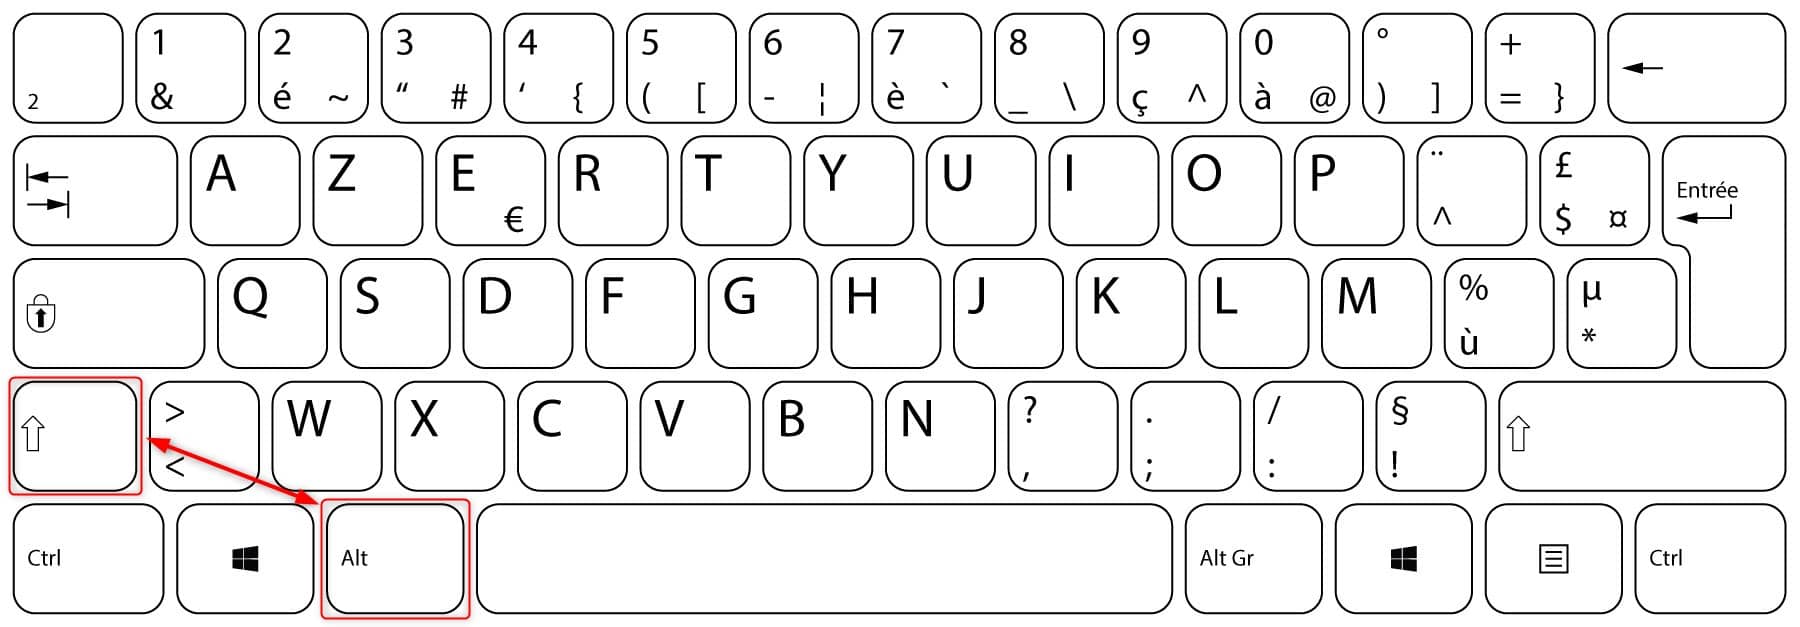 Changer clavier qwerty en azerty